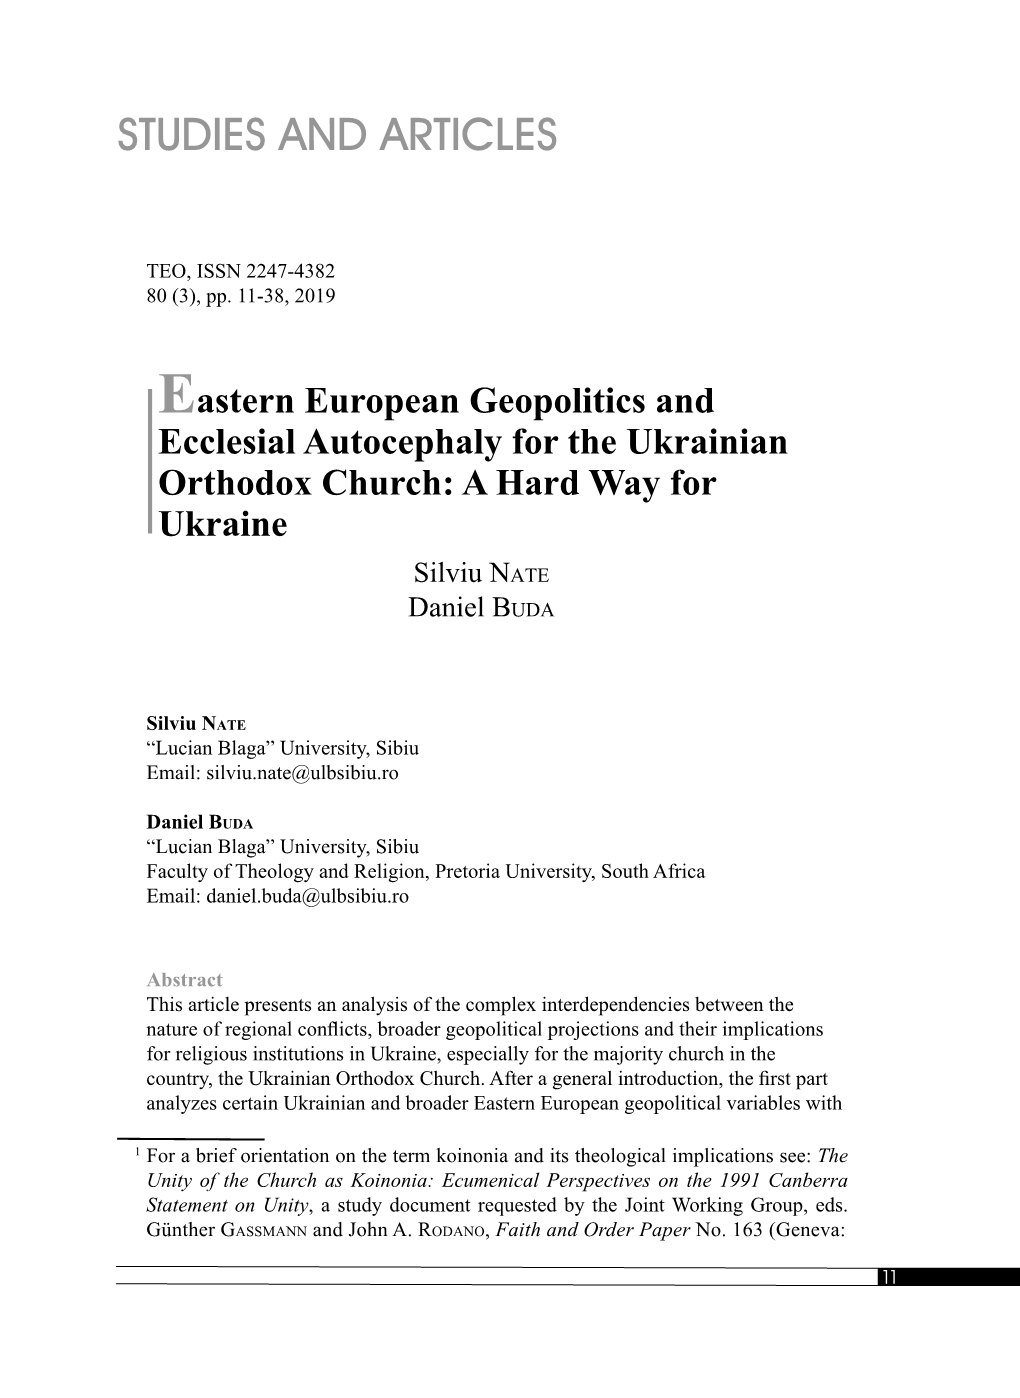 Eastern European Geopolitics and Ecclesial Autocephaly for the Ukrainian Orthodox Church: a Hard Way for Ukraine